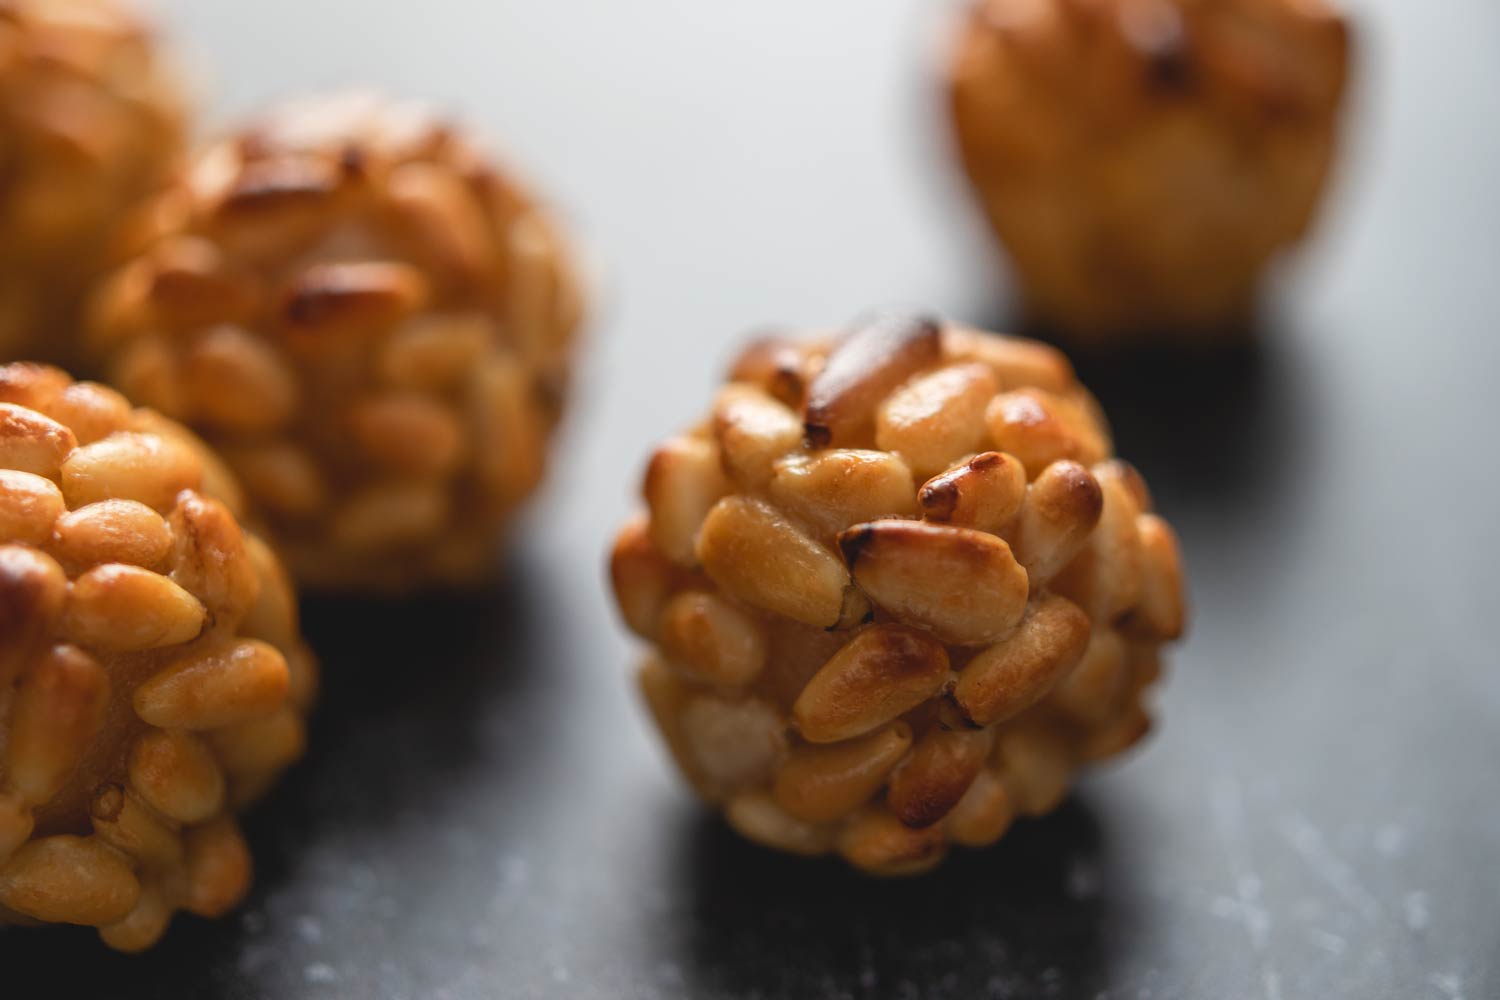 panellets: catalan pine nut cookies